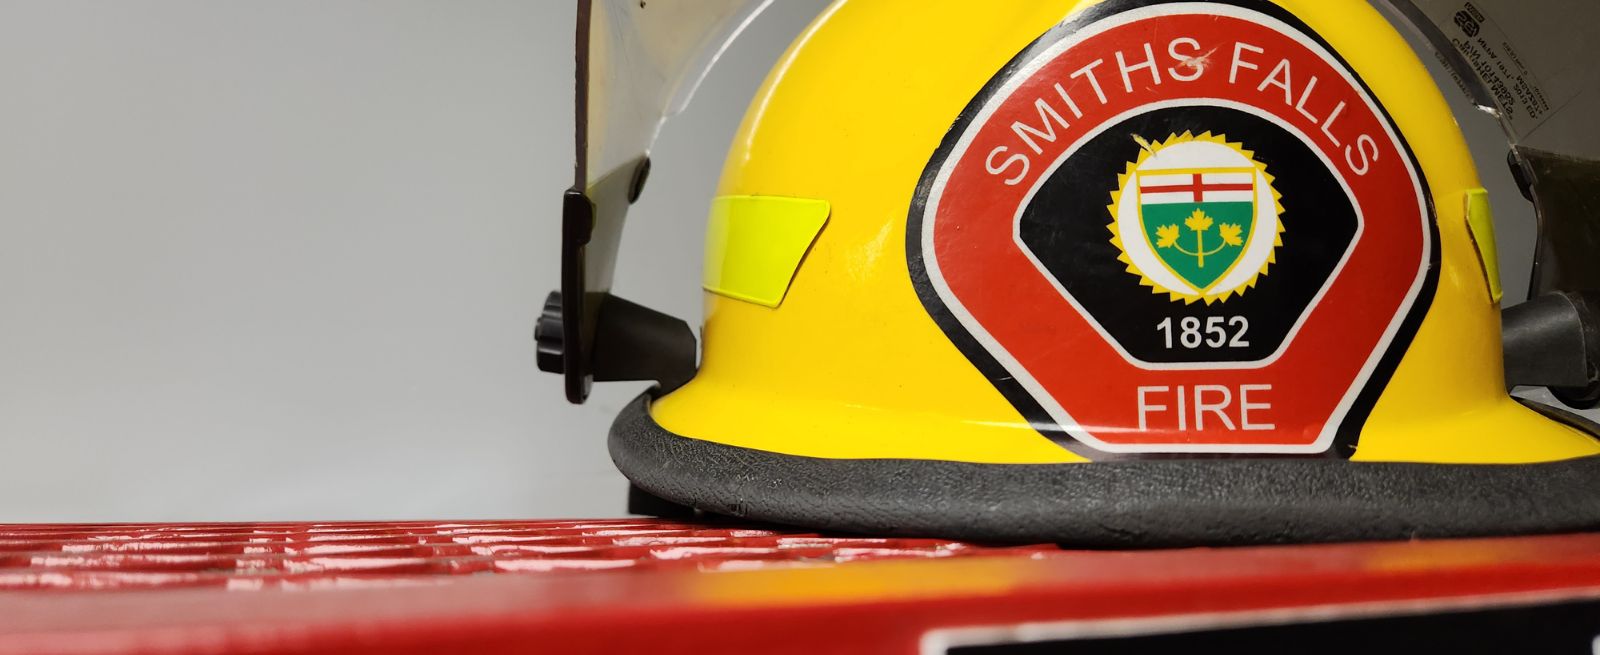 Smiths Falls Fire Helmet